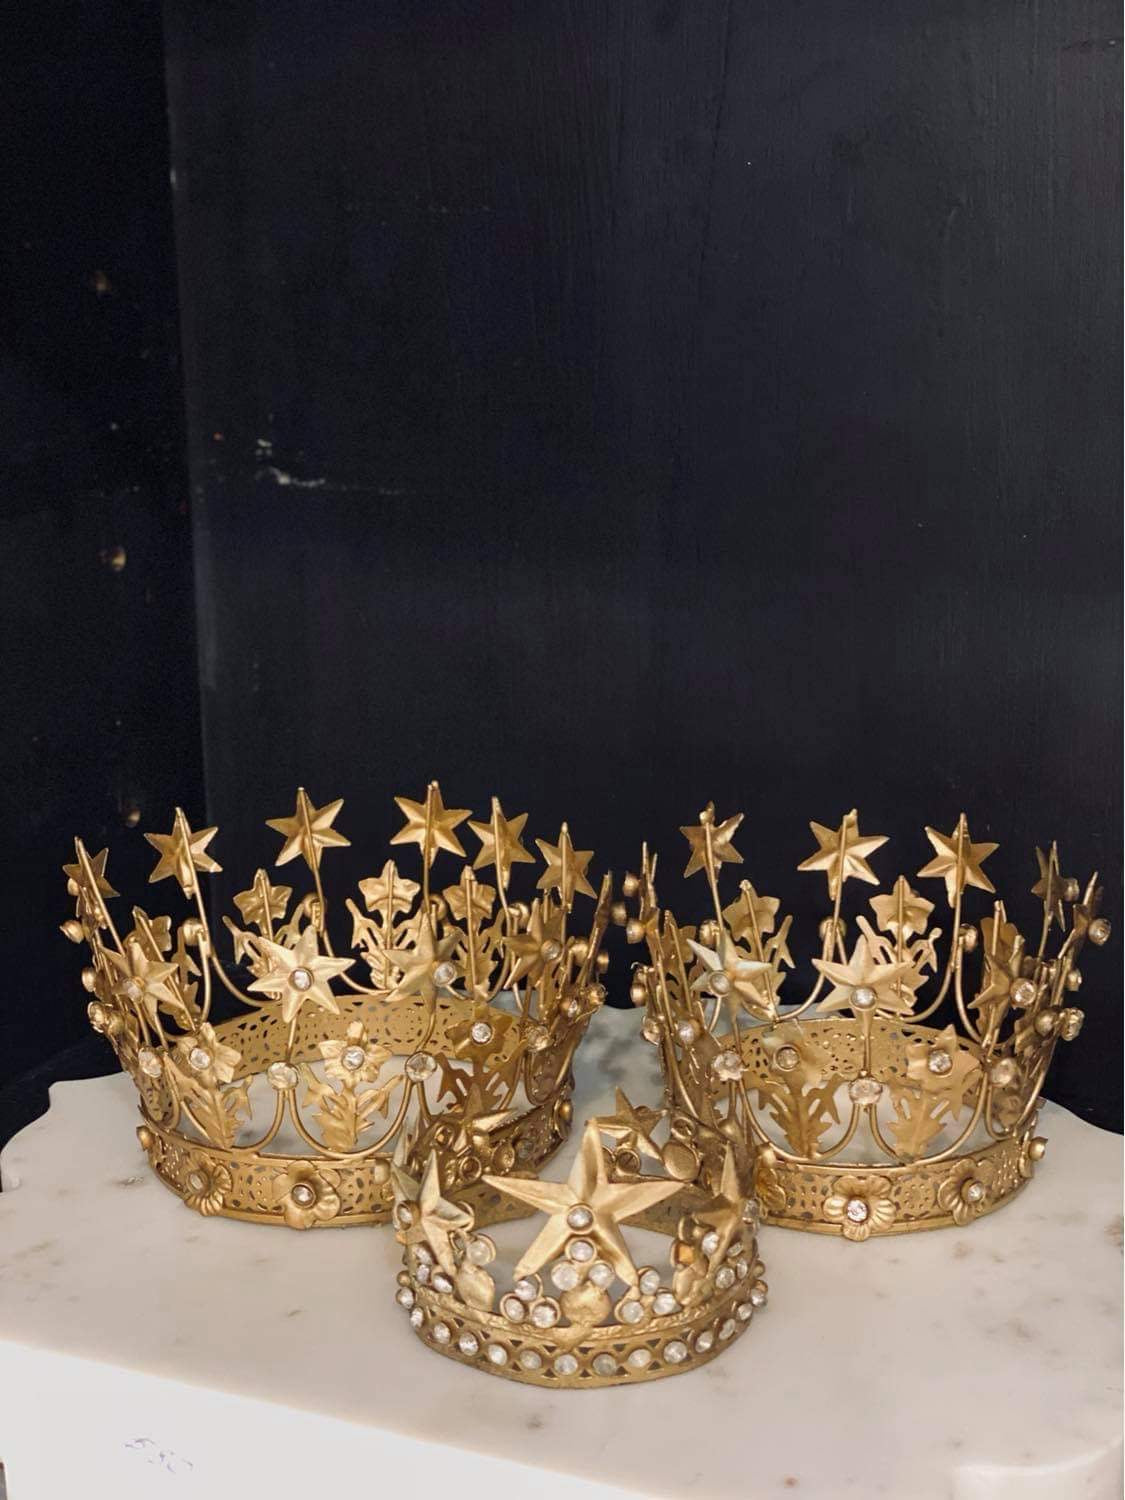 Throne Crown - 3 Sizes